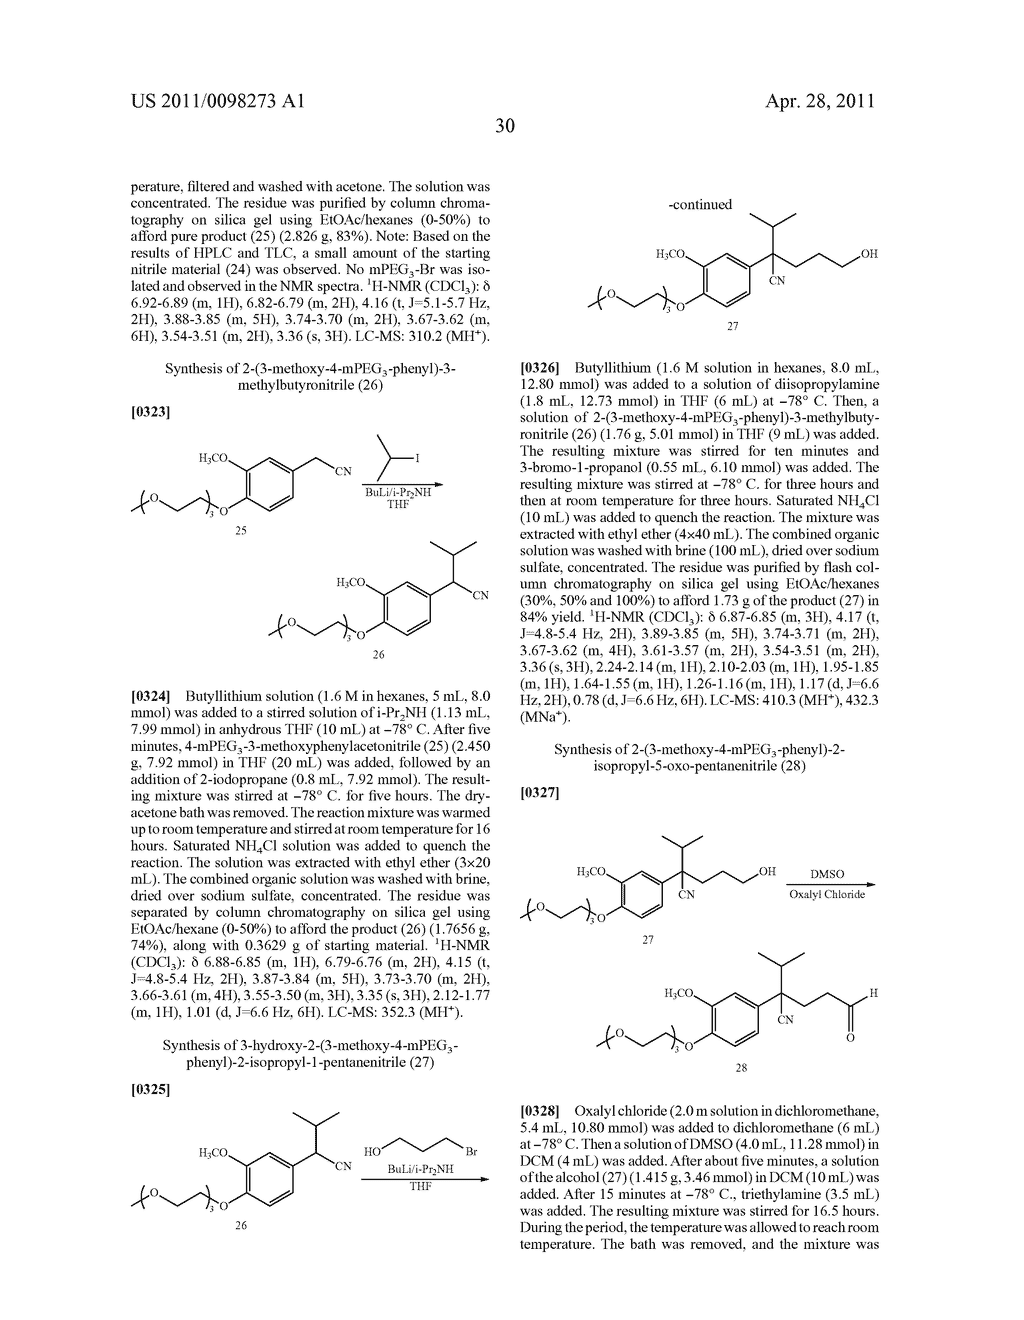 Oligomer-Calcium Channel Blocker Conjugates - diagram, schematic, and image 31